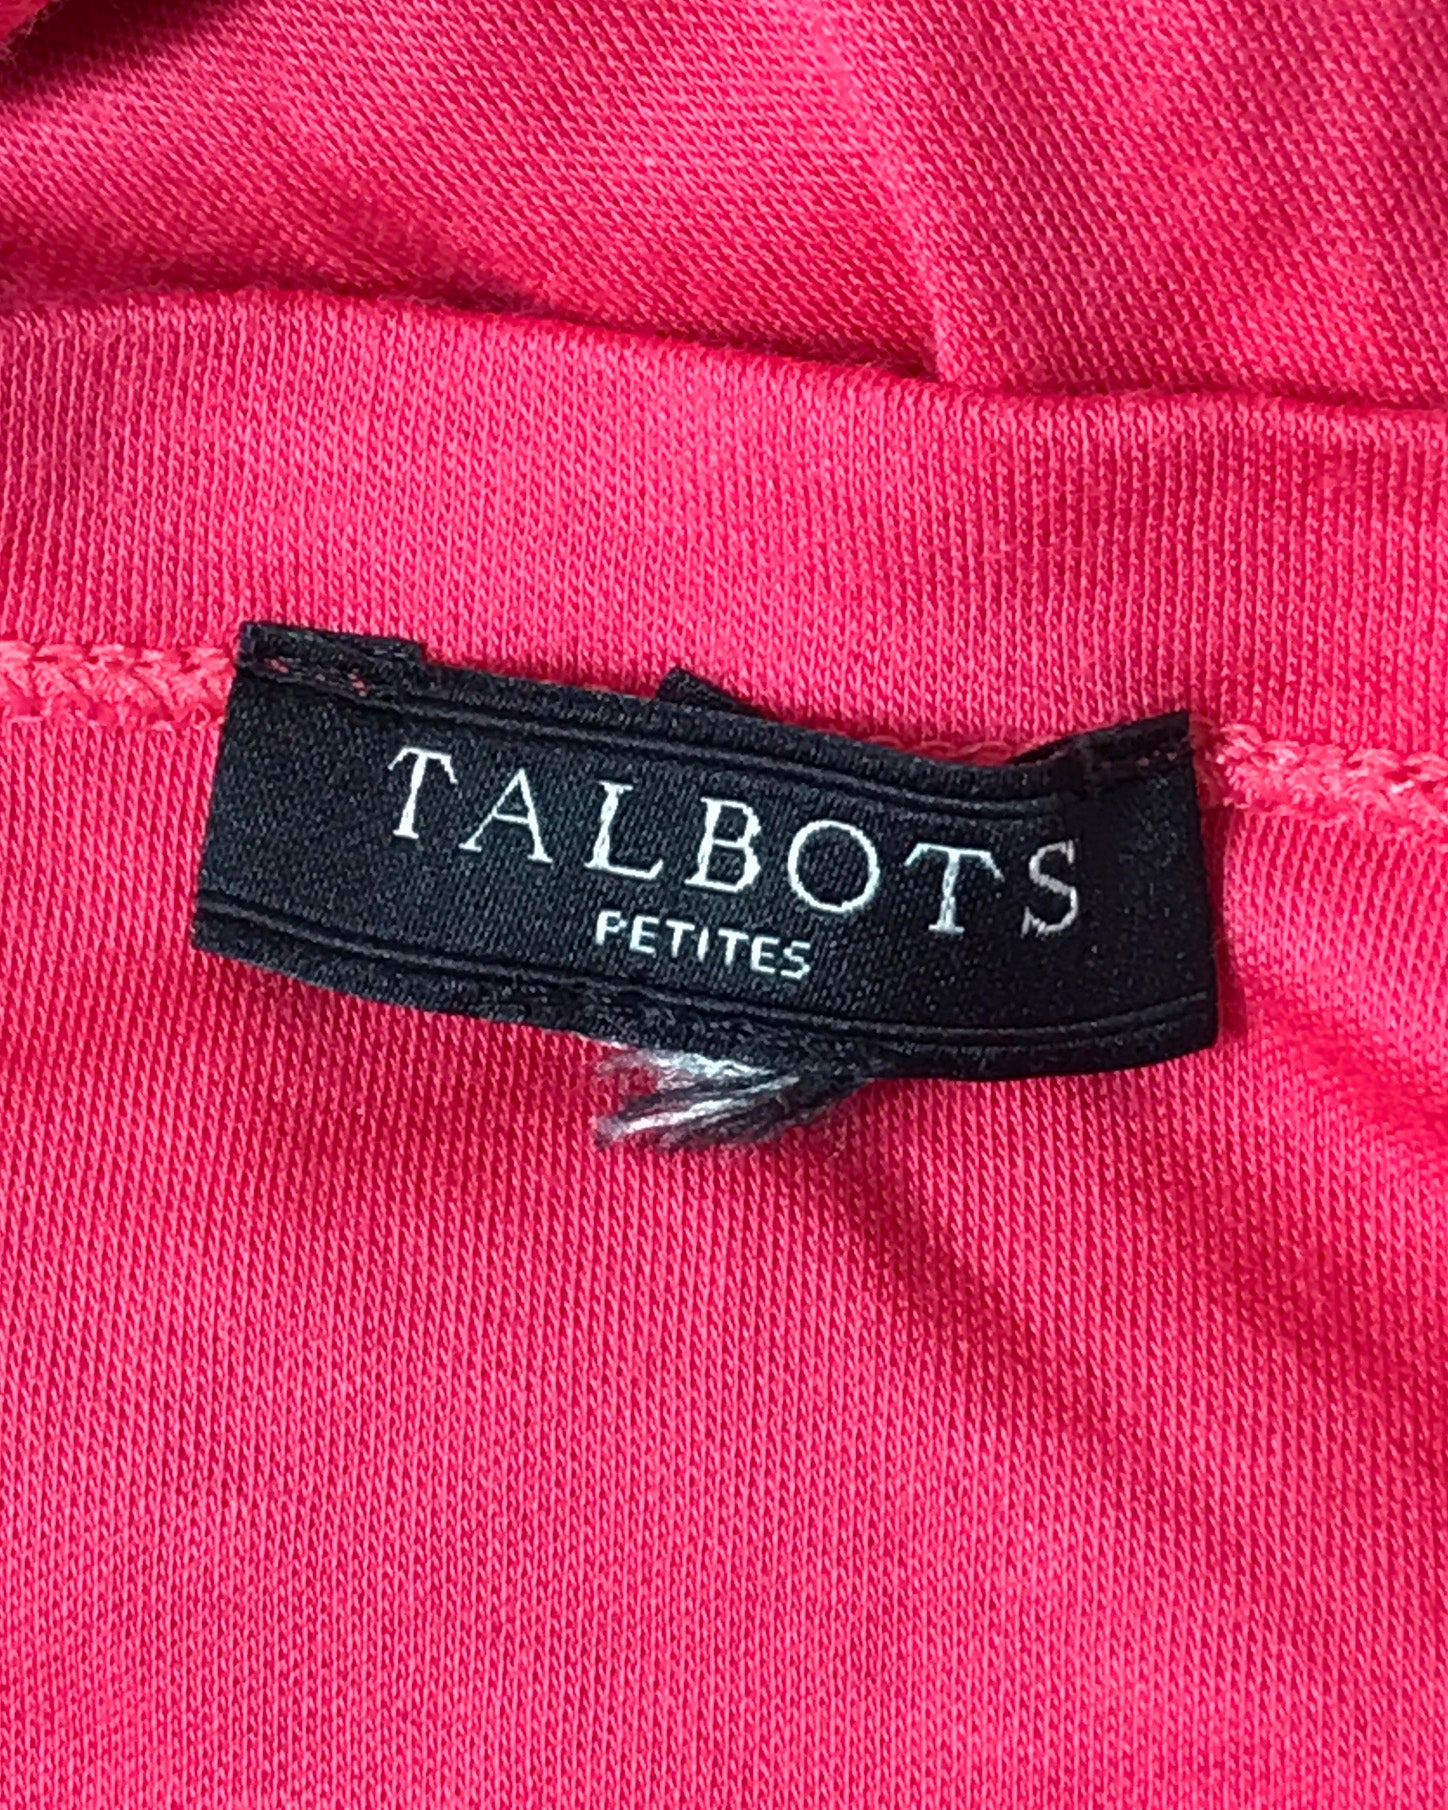 Talbots Pink Three-Quarter Sleeved Top Women's Size XS